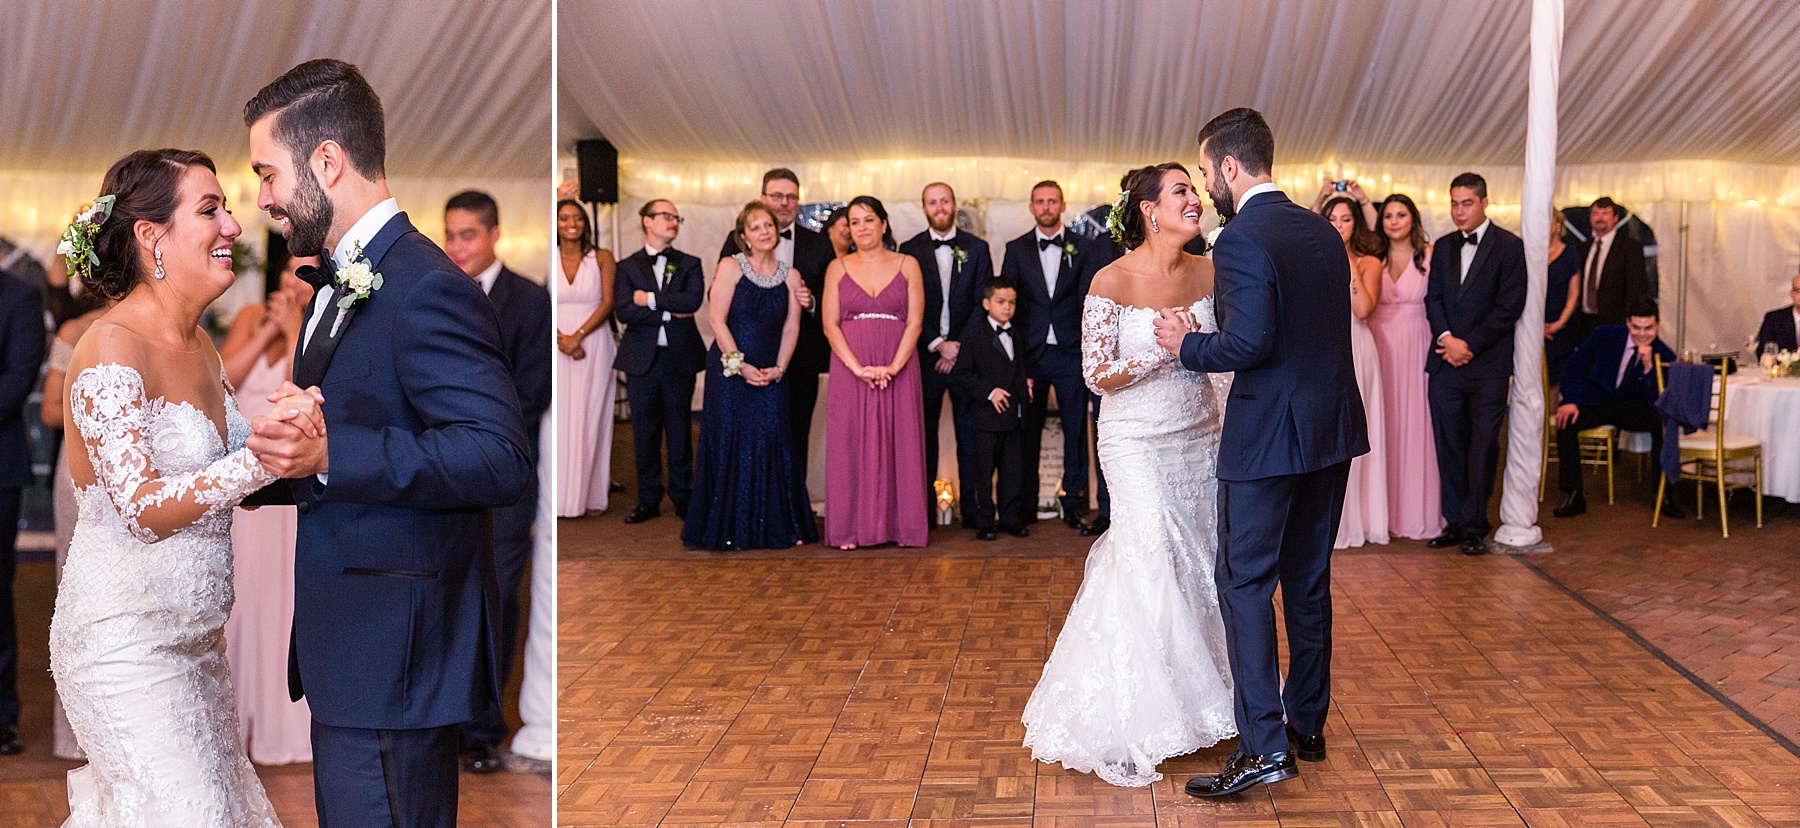 Belmont Manor wedding reception dances photographed by Alexandra Mandato Photography